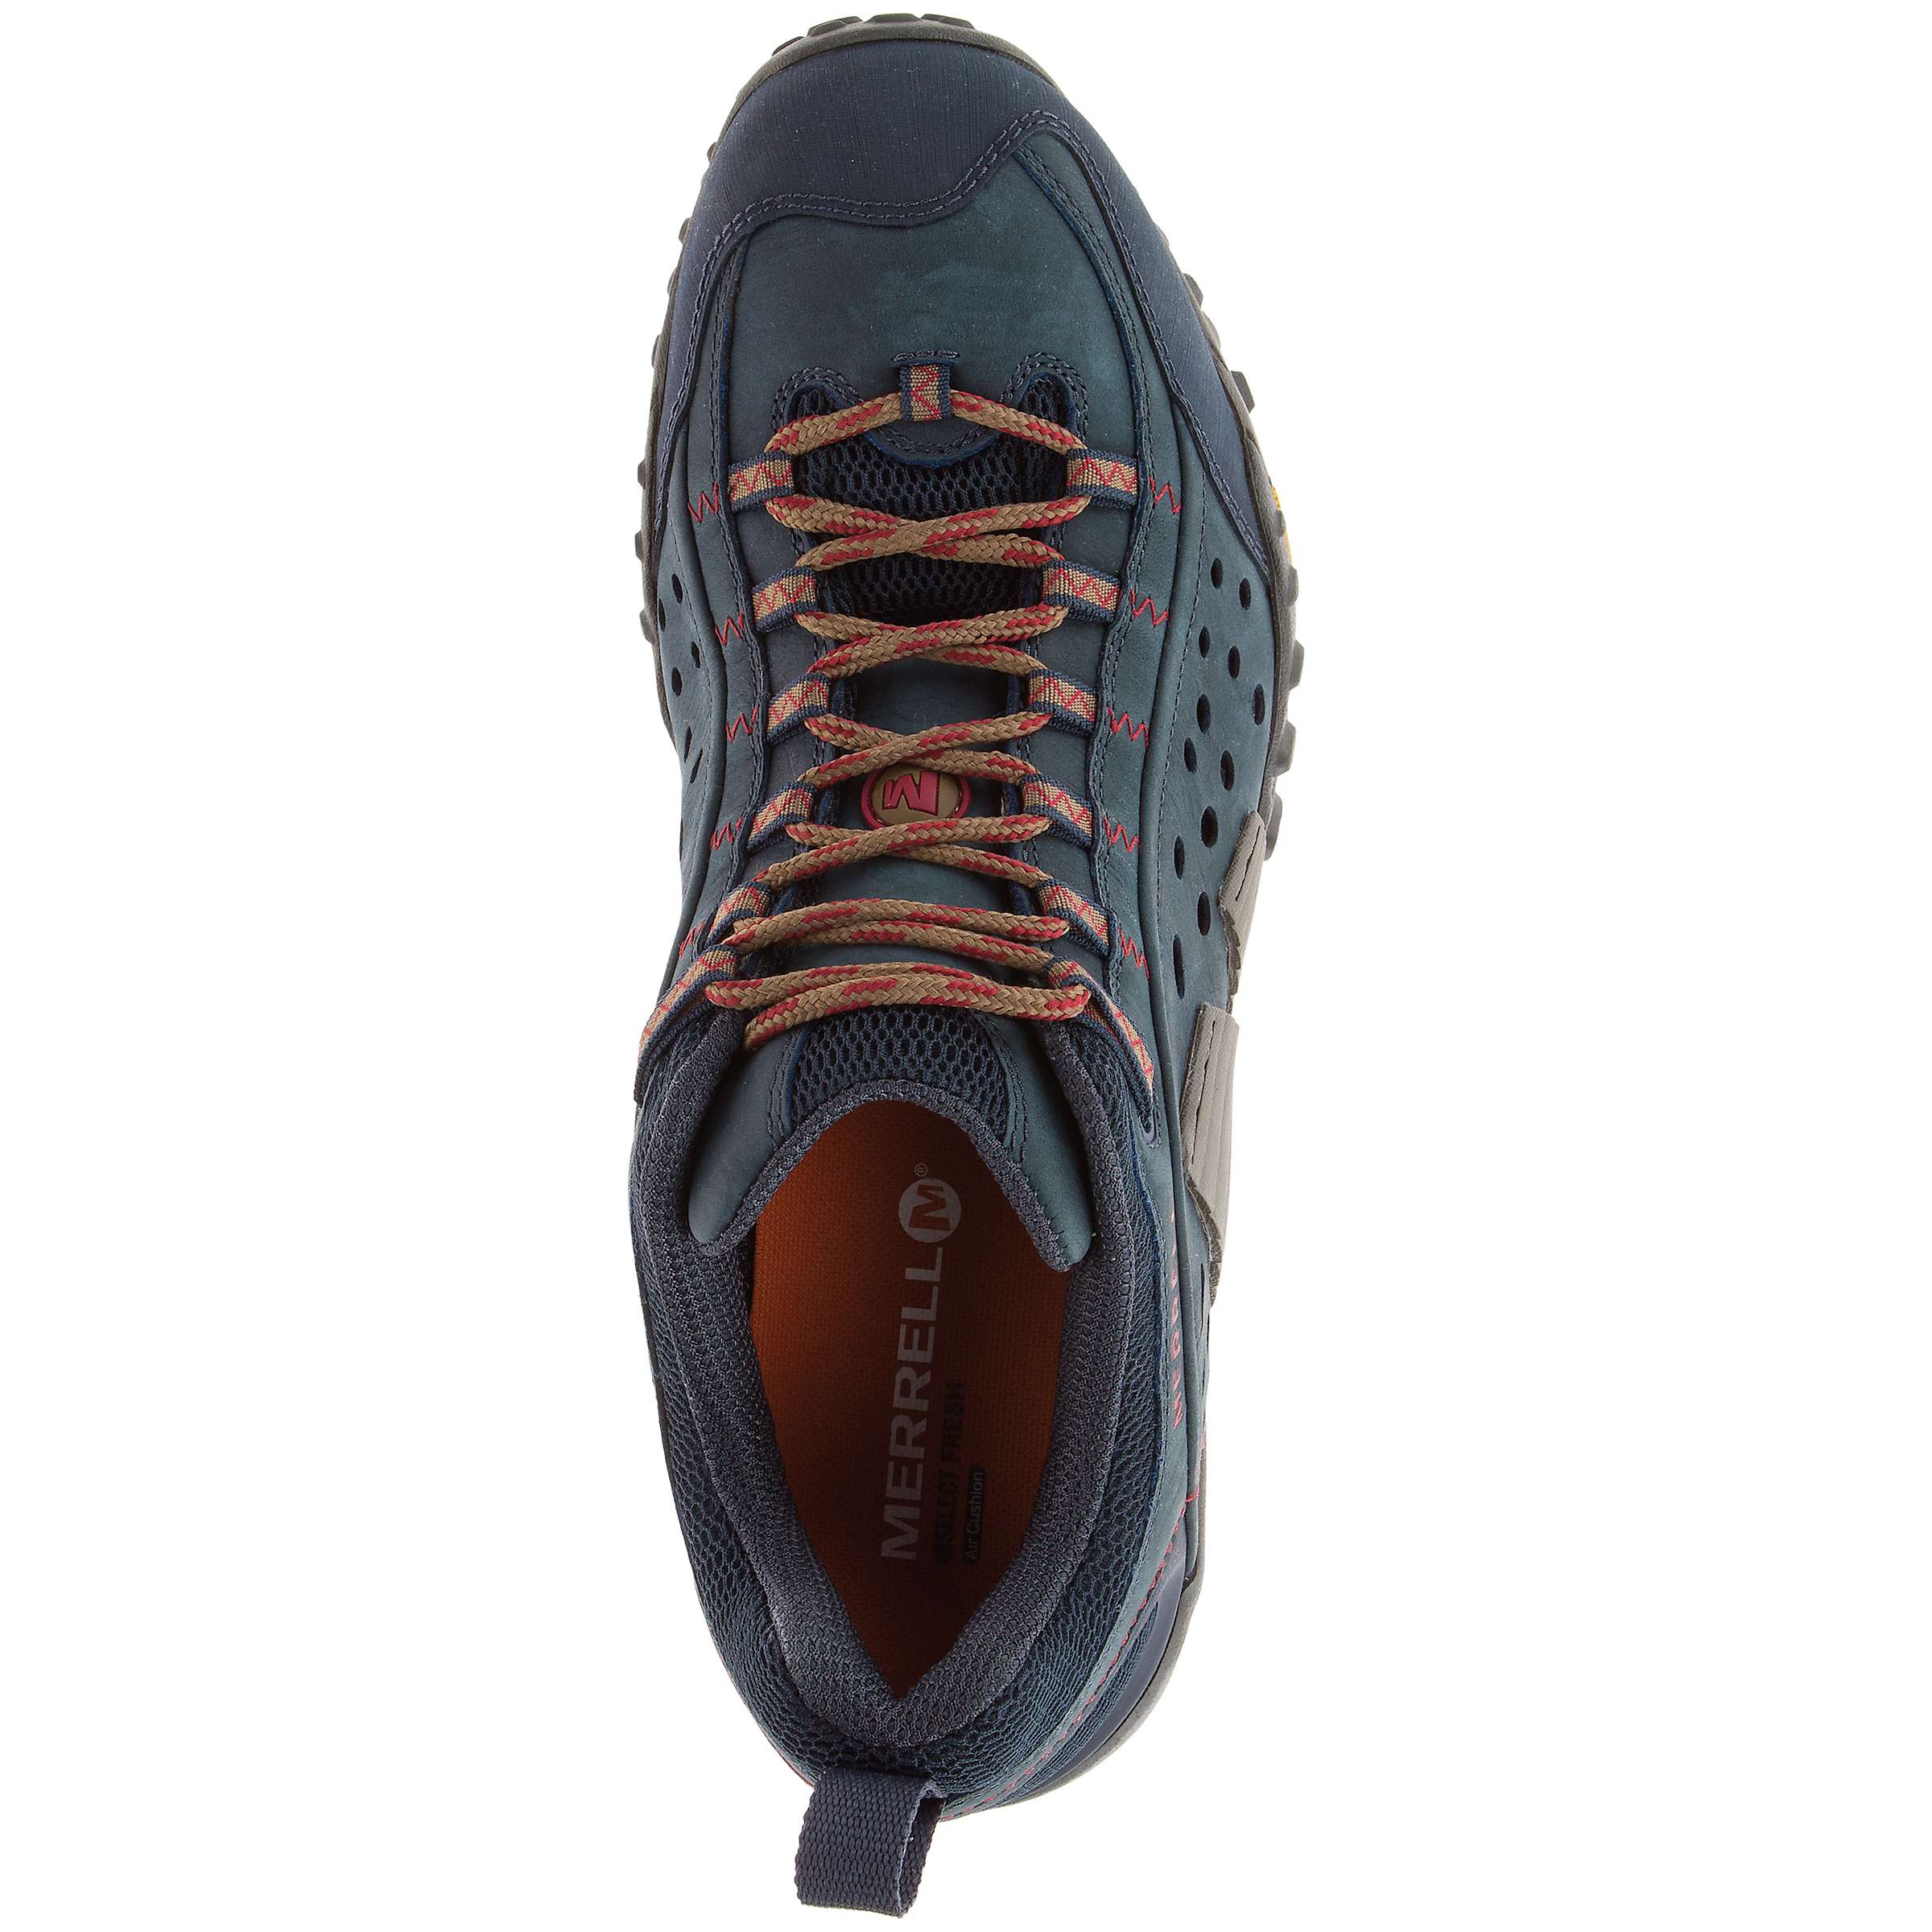 Buy Merrell Intercept Men's Leather Walking Shoes, Blue Wing Online at johnlewis.com